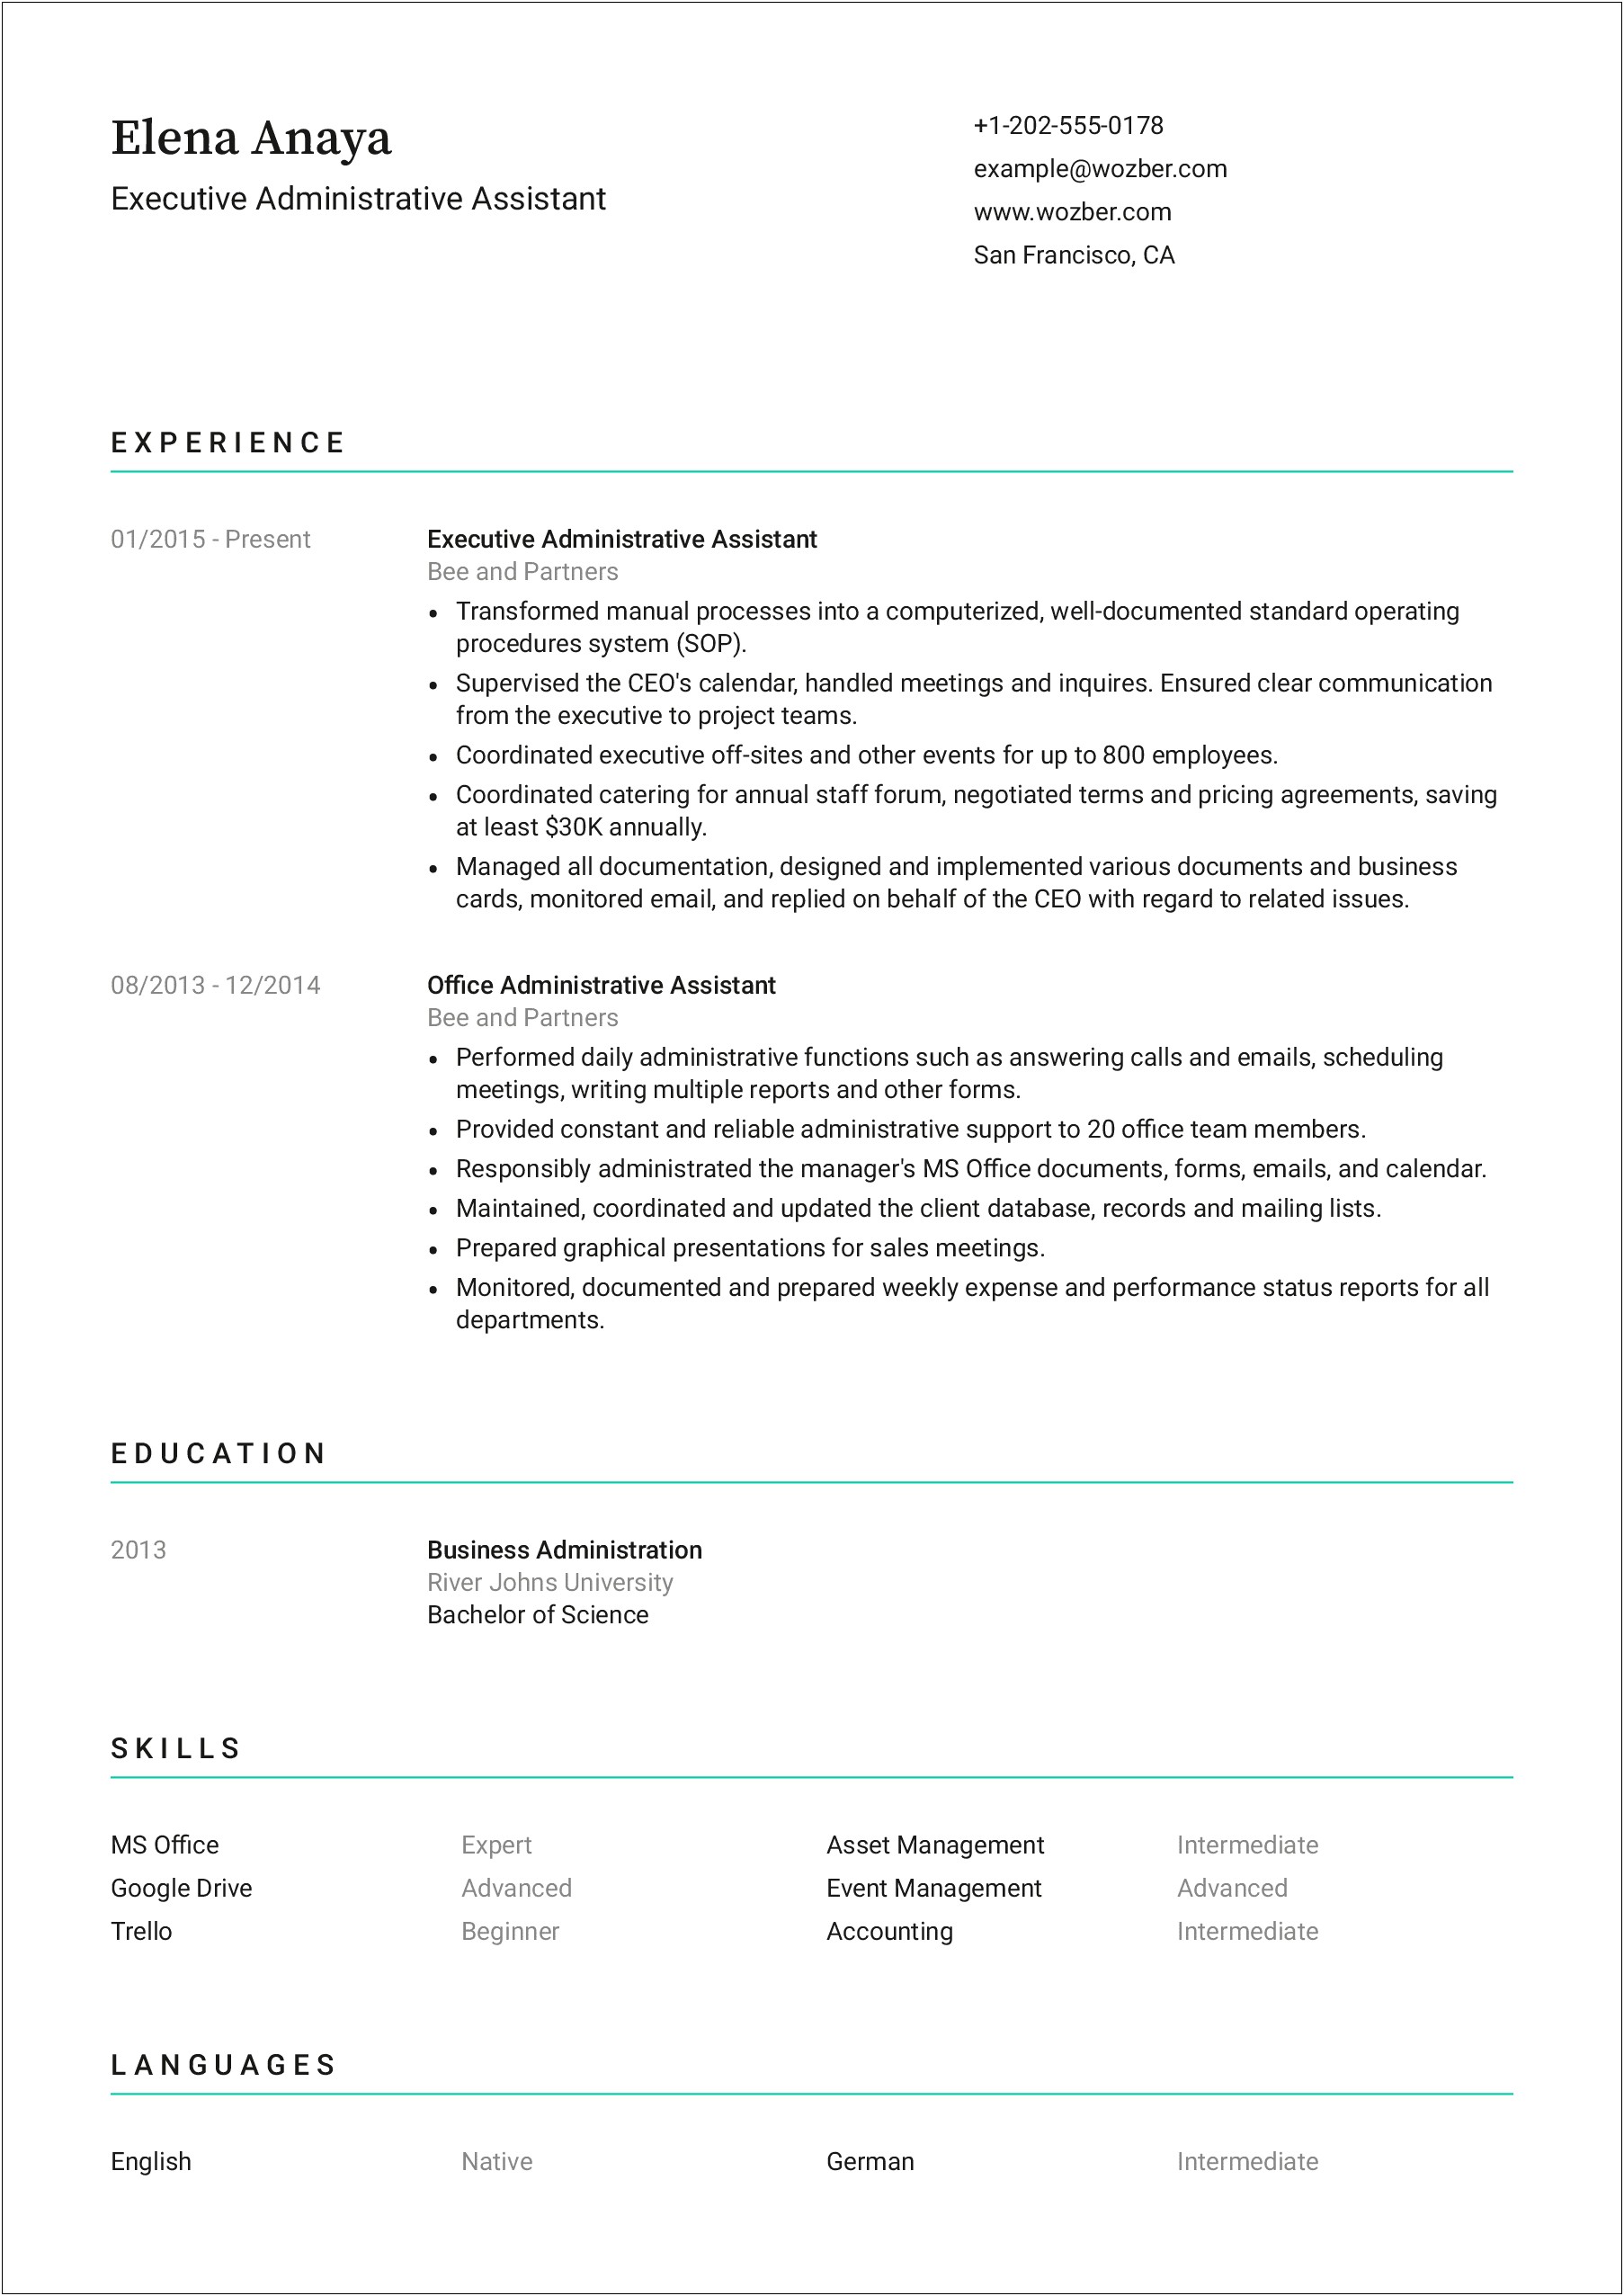 Sample Resume Skills For Administrative Assistant